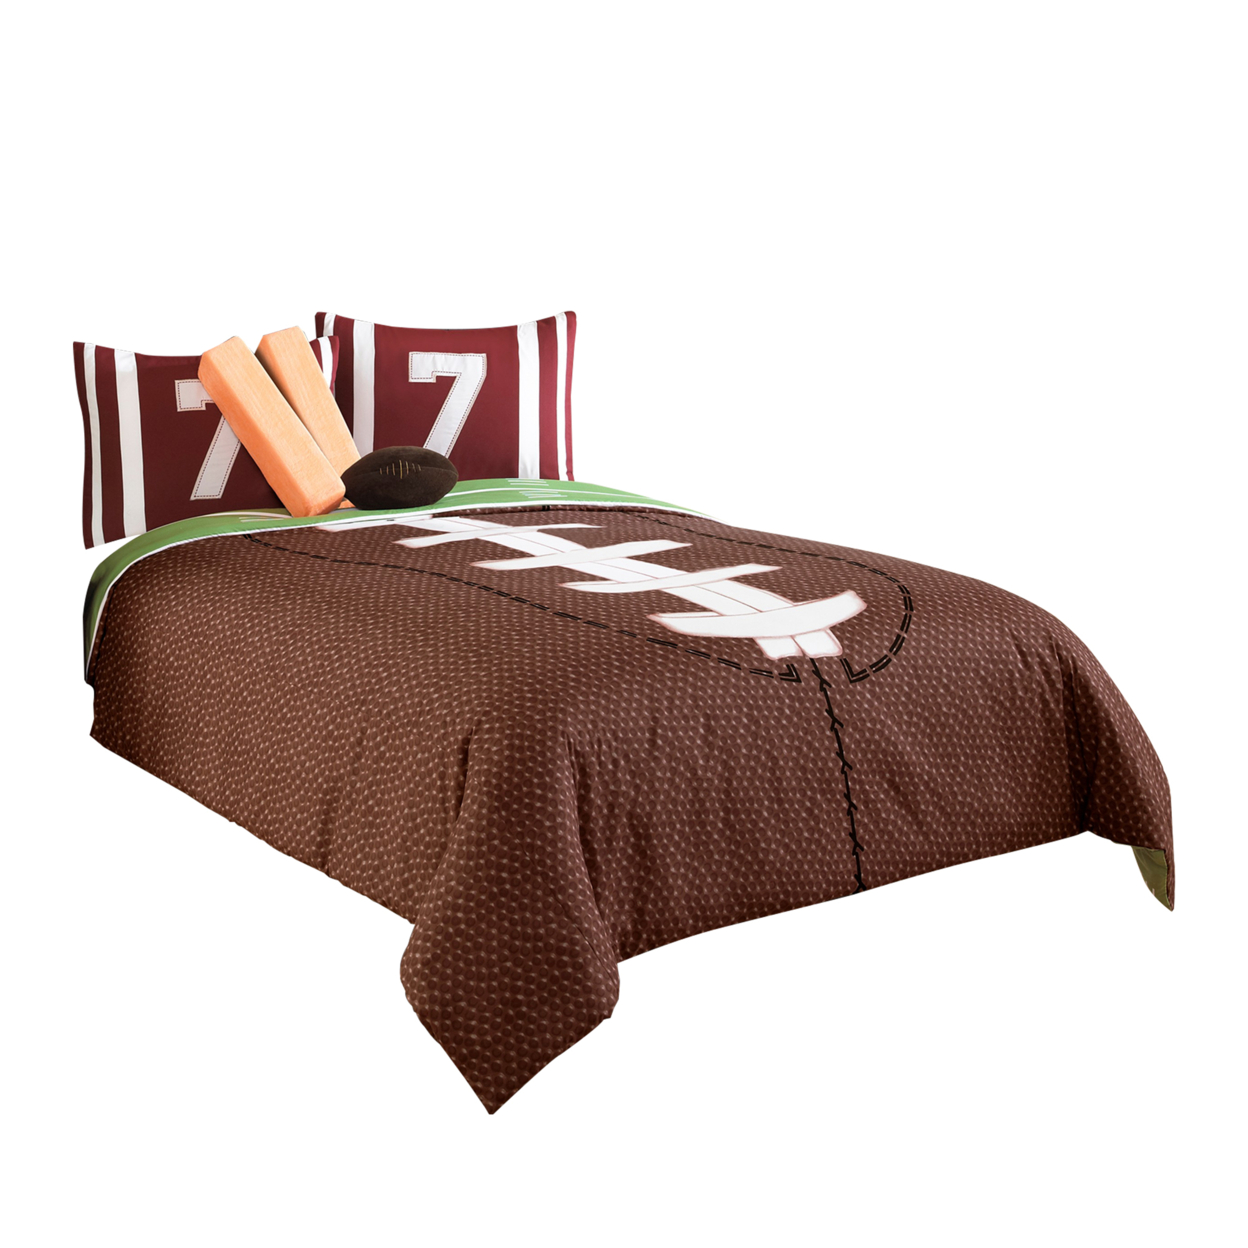 6 Piece Full Comforter Set With Football Field Print, Brown And Green- Saltoro Sherpi